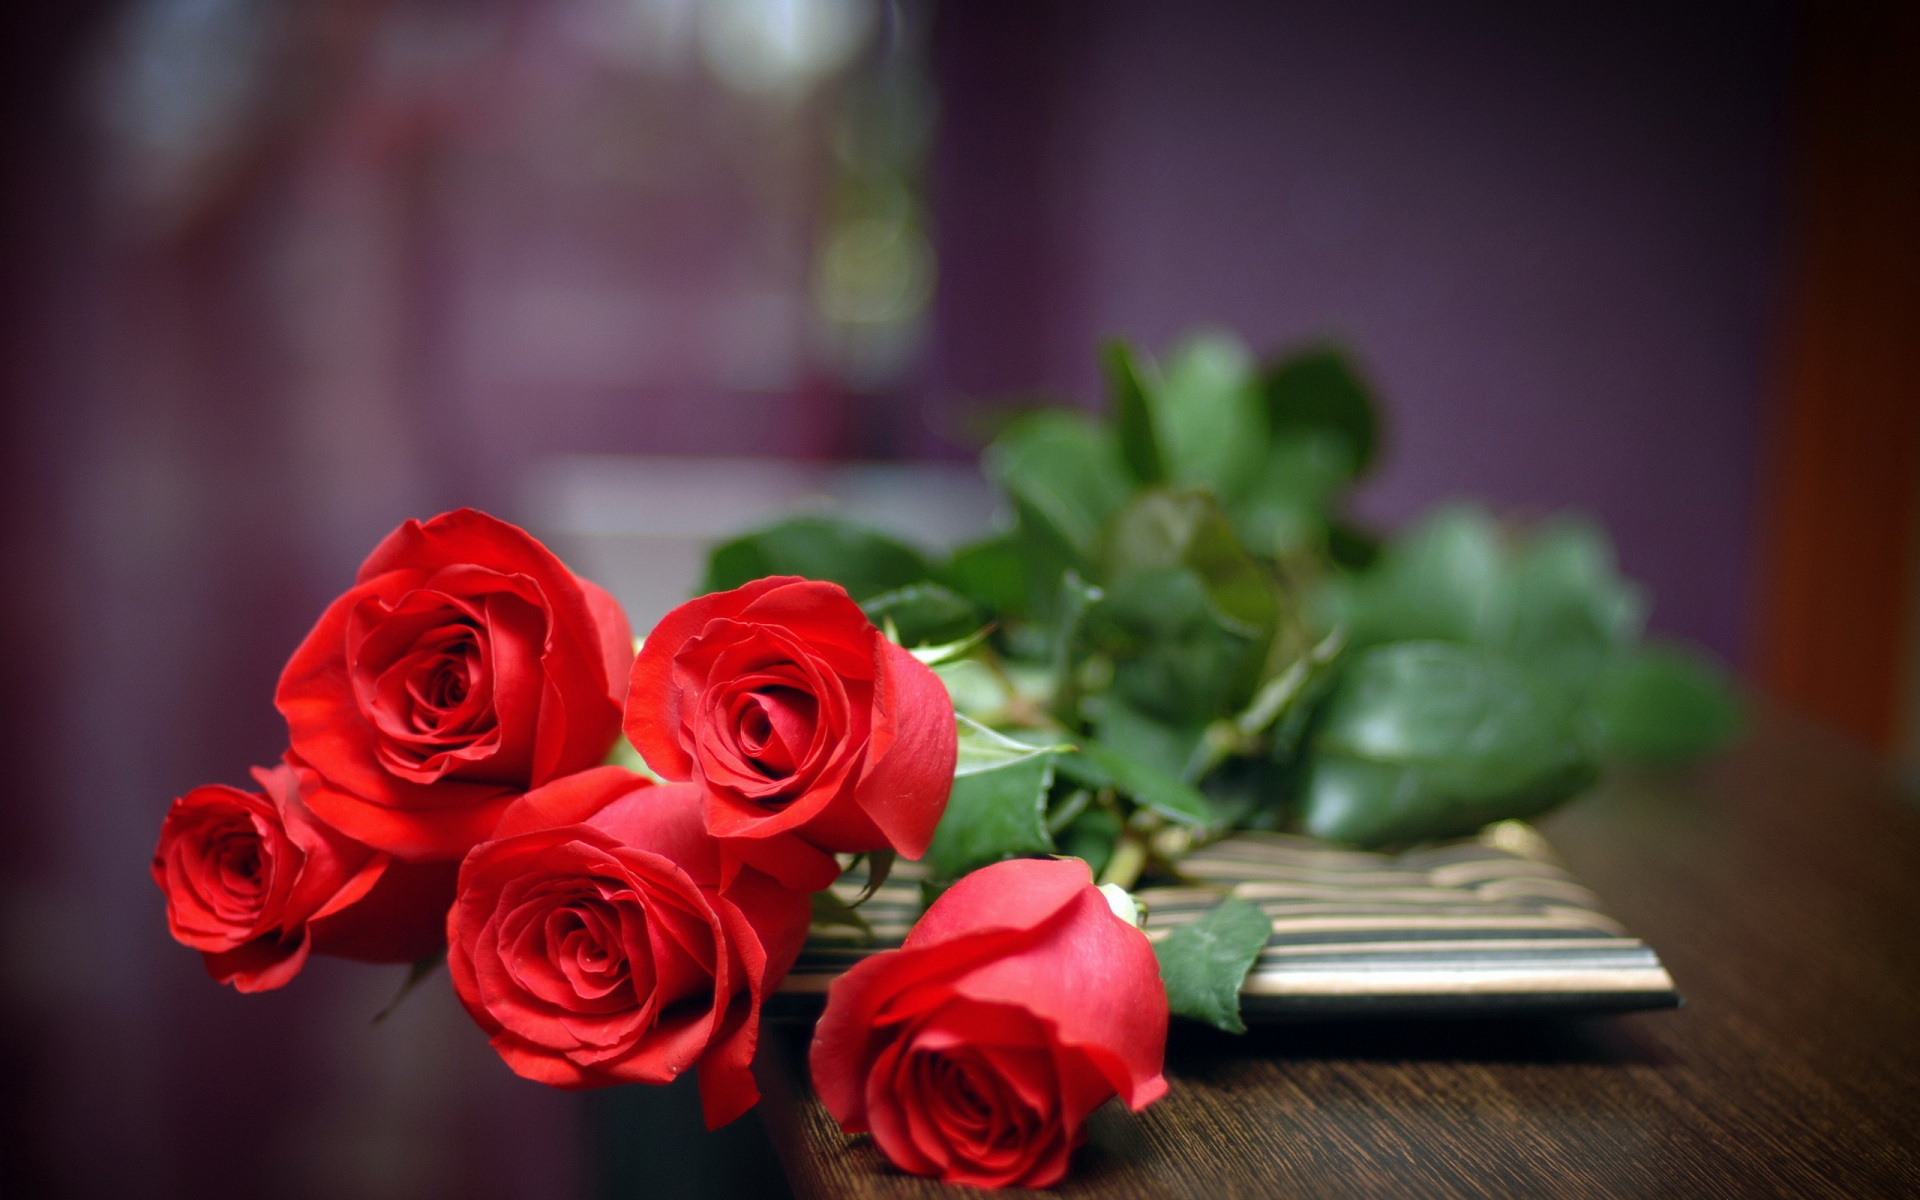 Five Red Roses - HD Wallpaper 